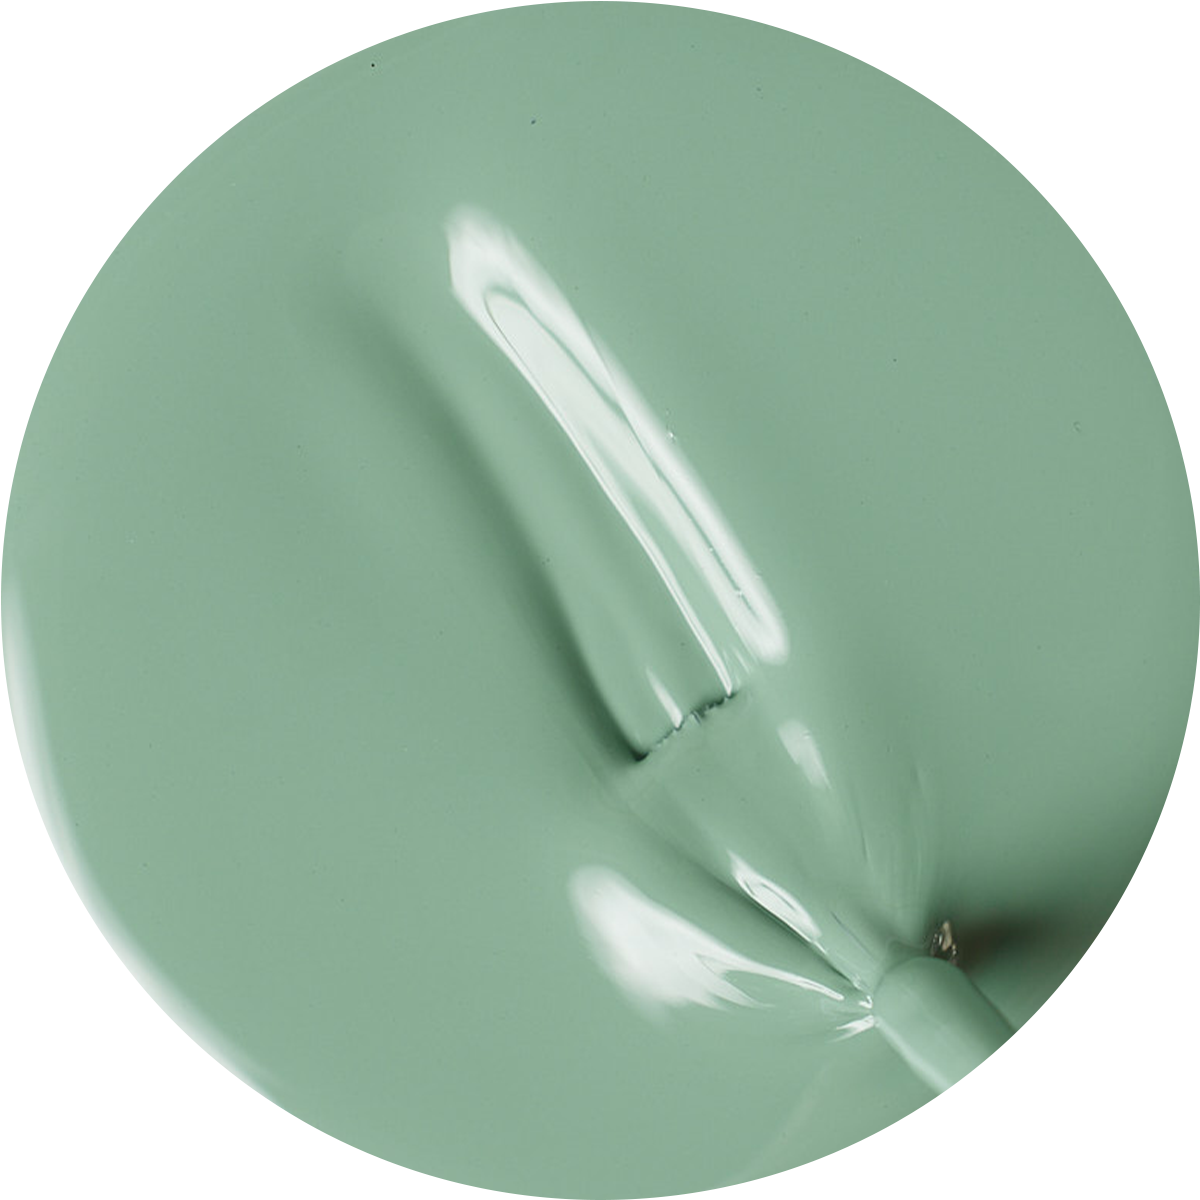 paint swatch of fern green nail polish